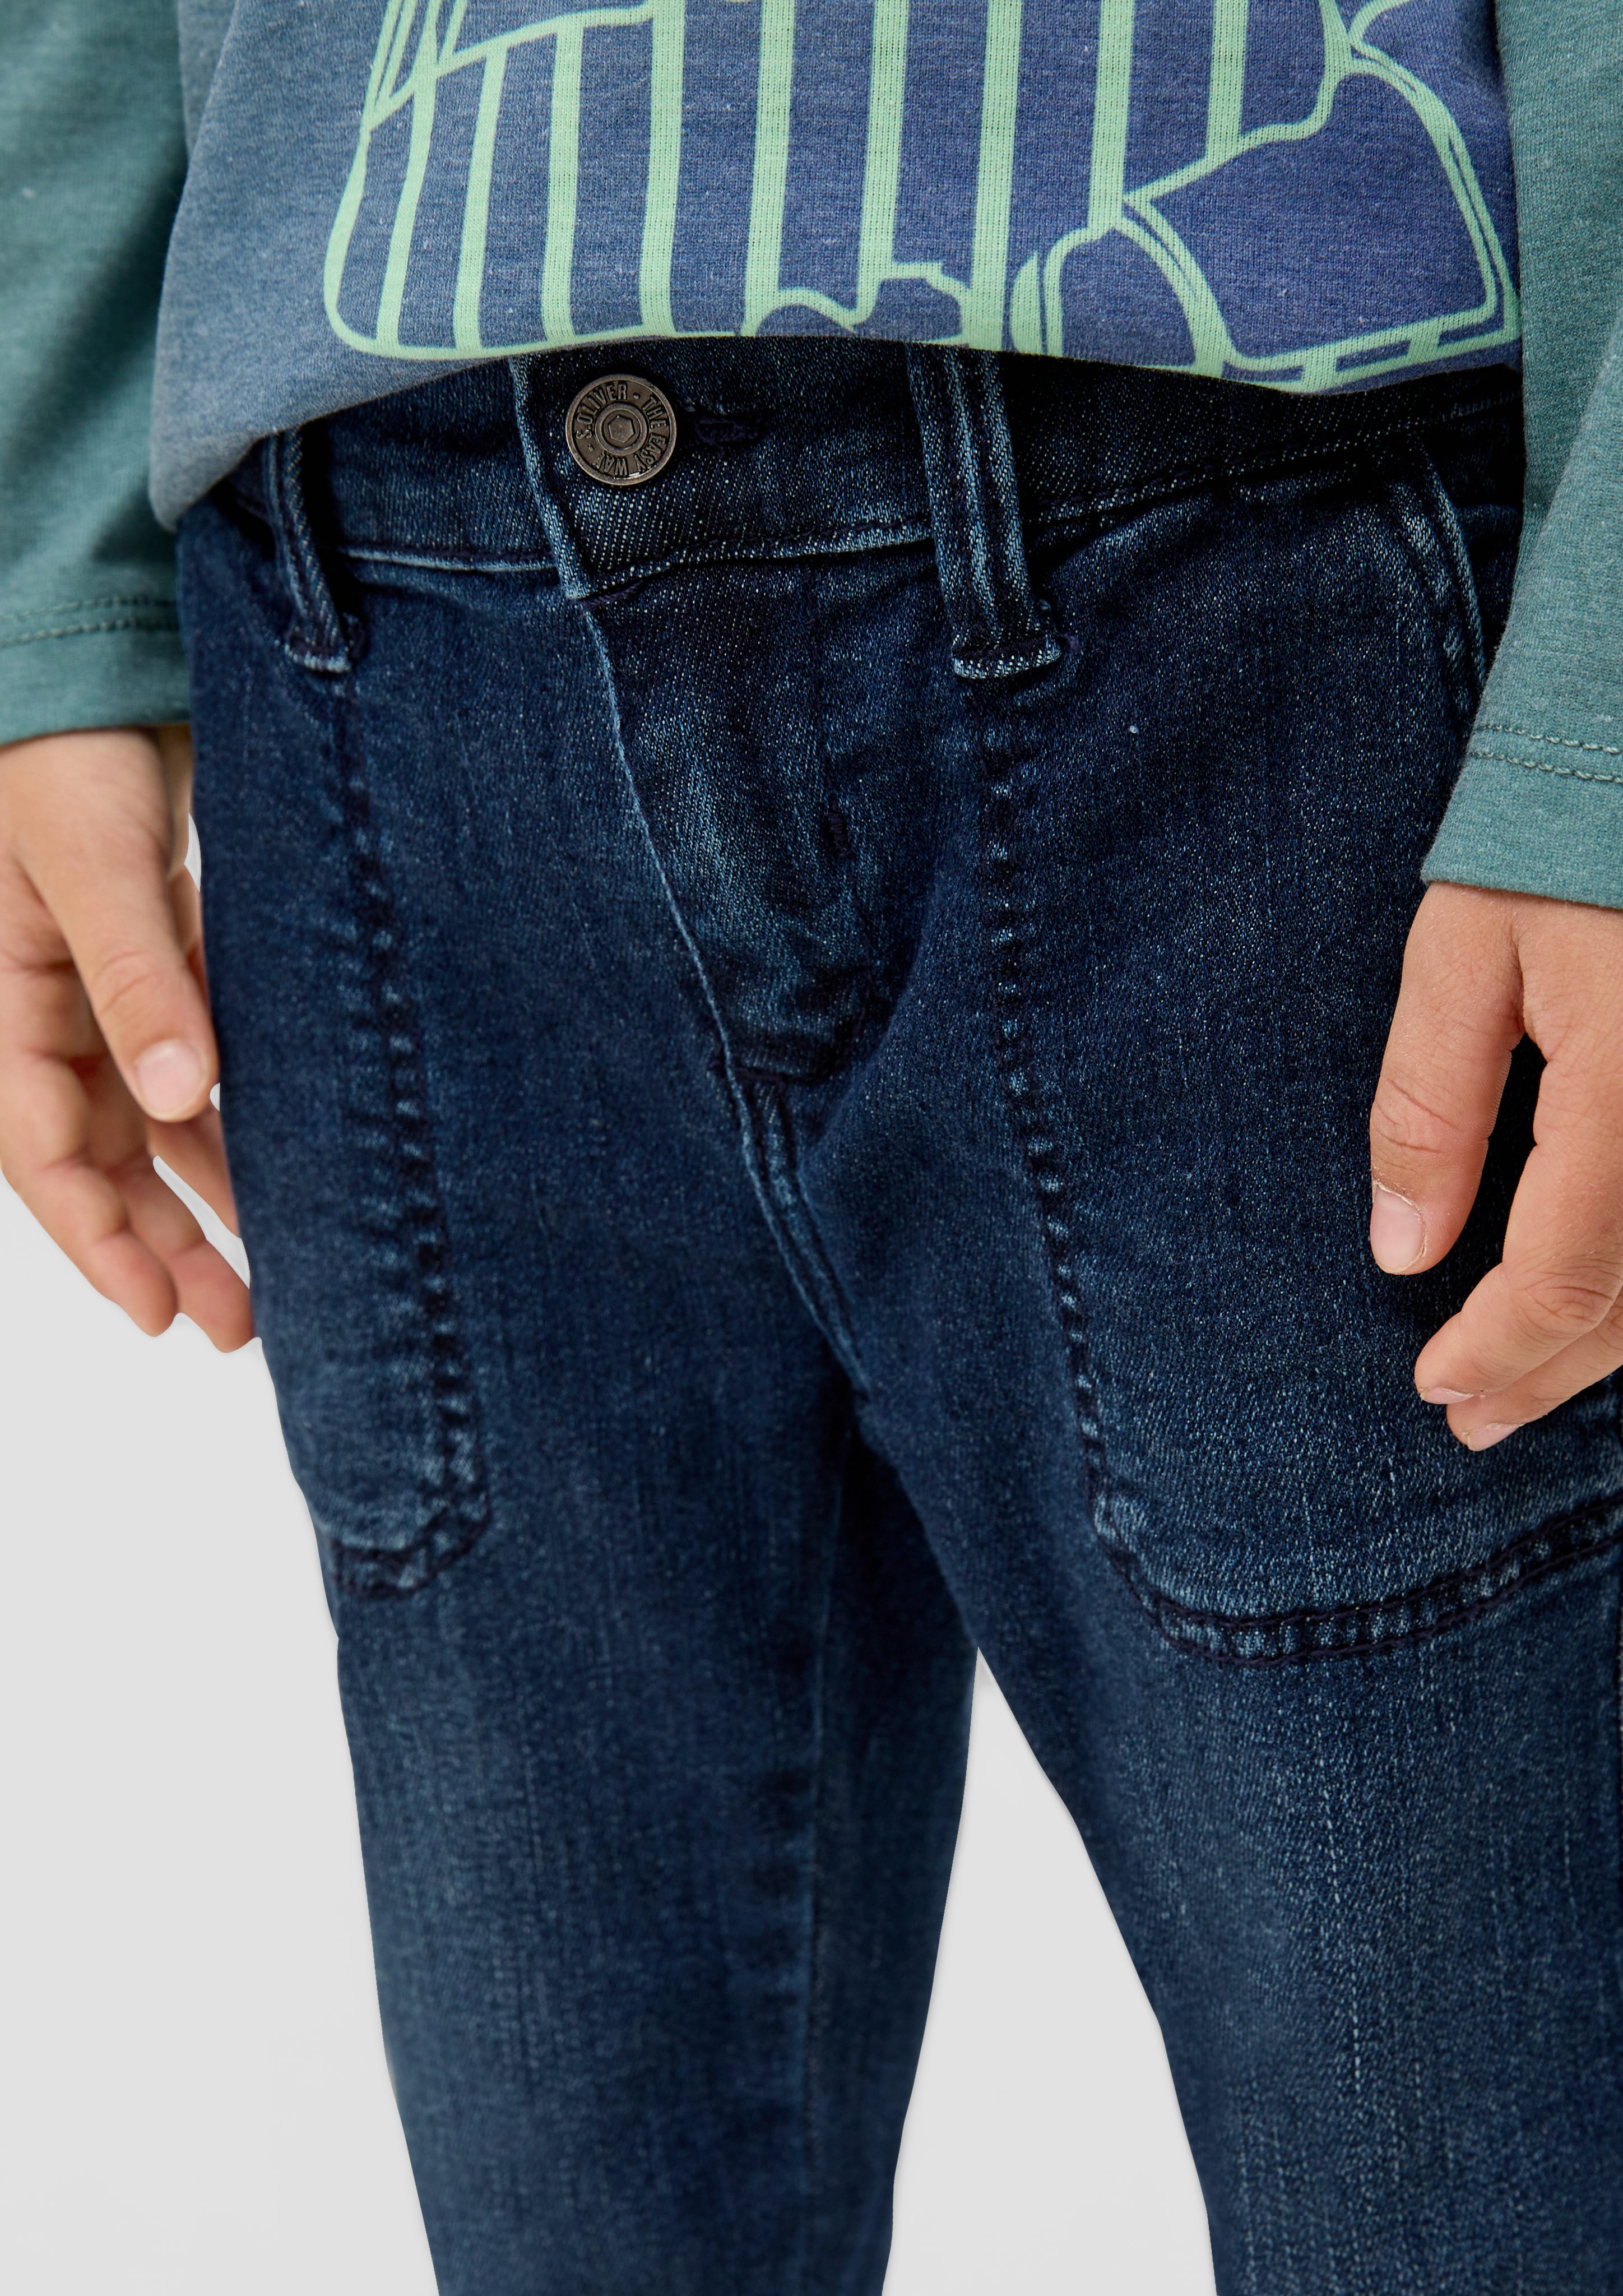 Bund s.Oliver 5-Pocket-Jeans mit Jeans Waschung Pelle: verstellbarem